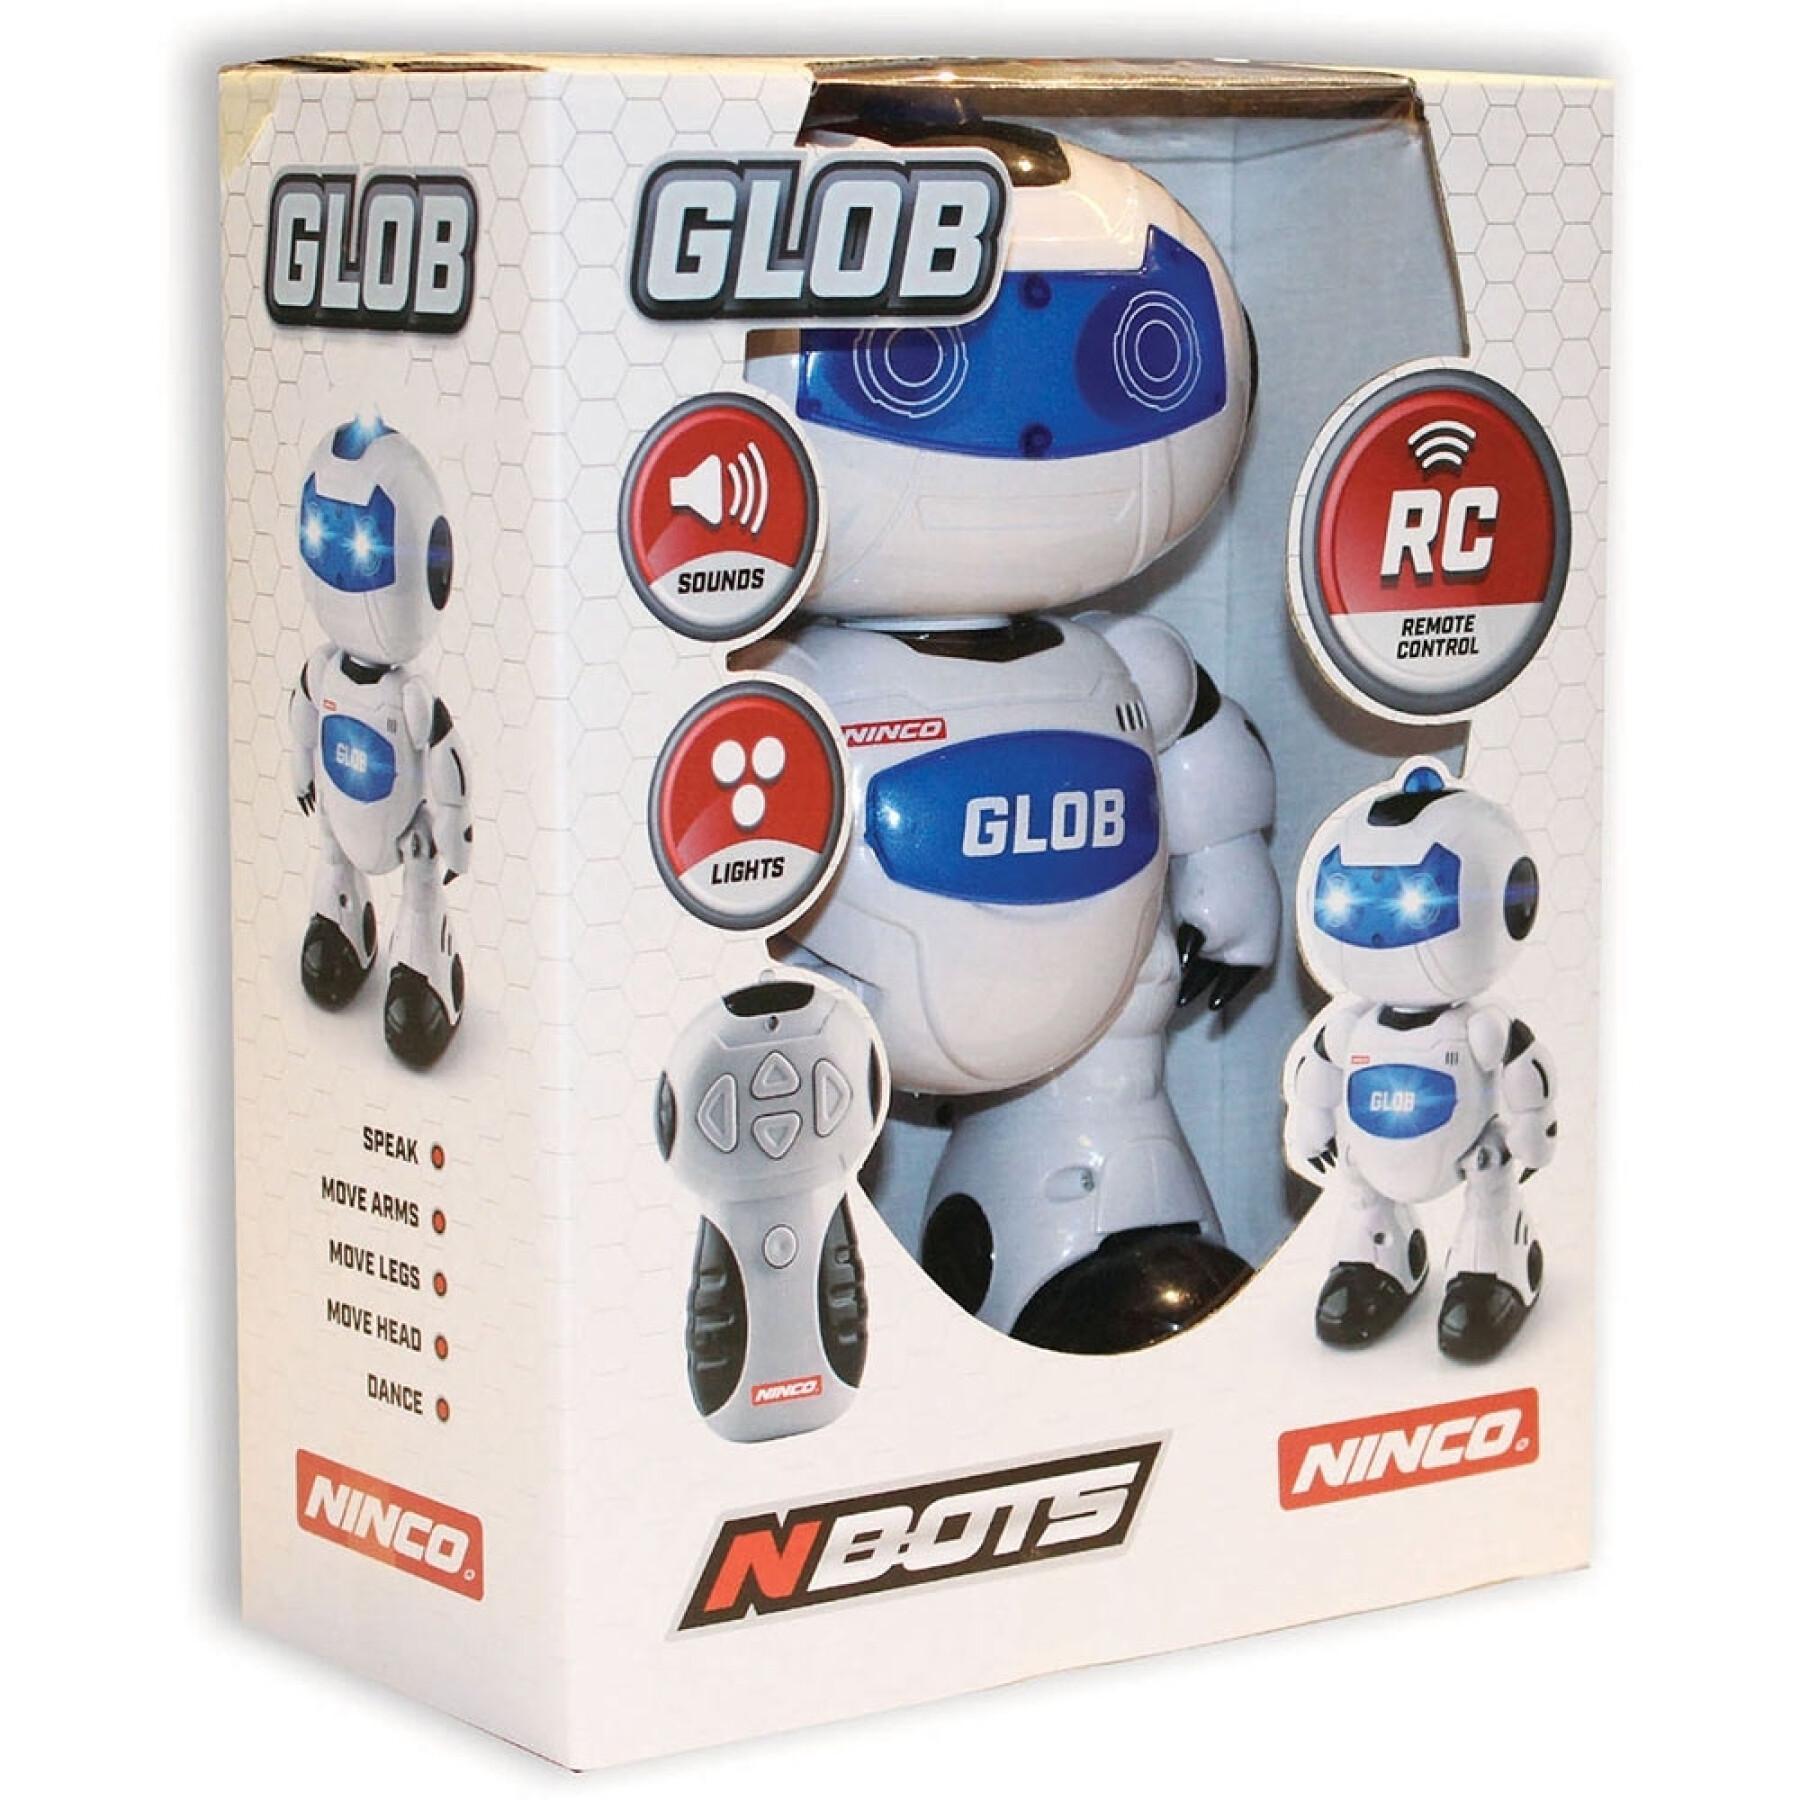 Robot telecomandato che parla inglese Ninco Glob